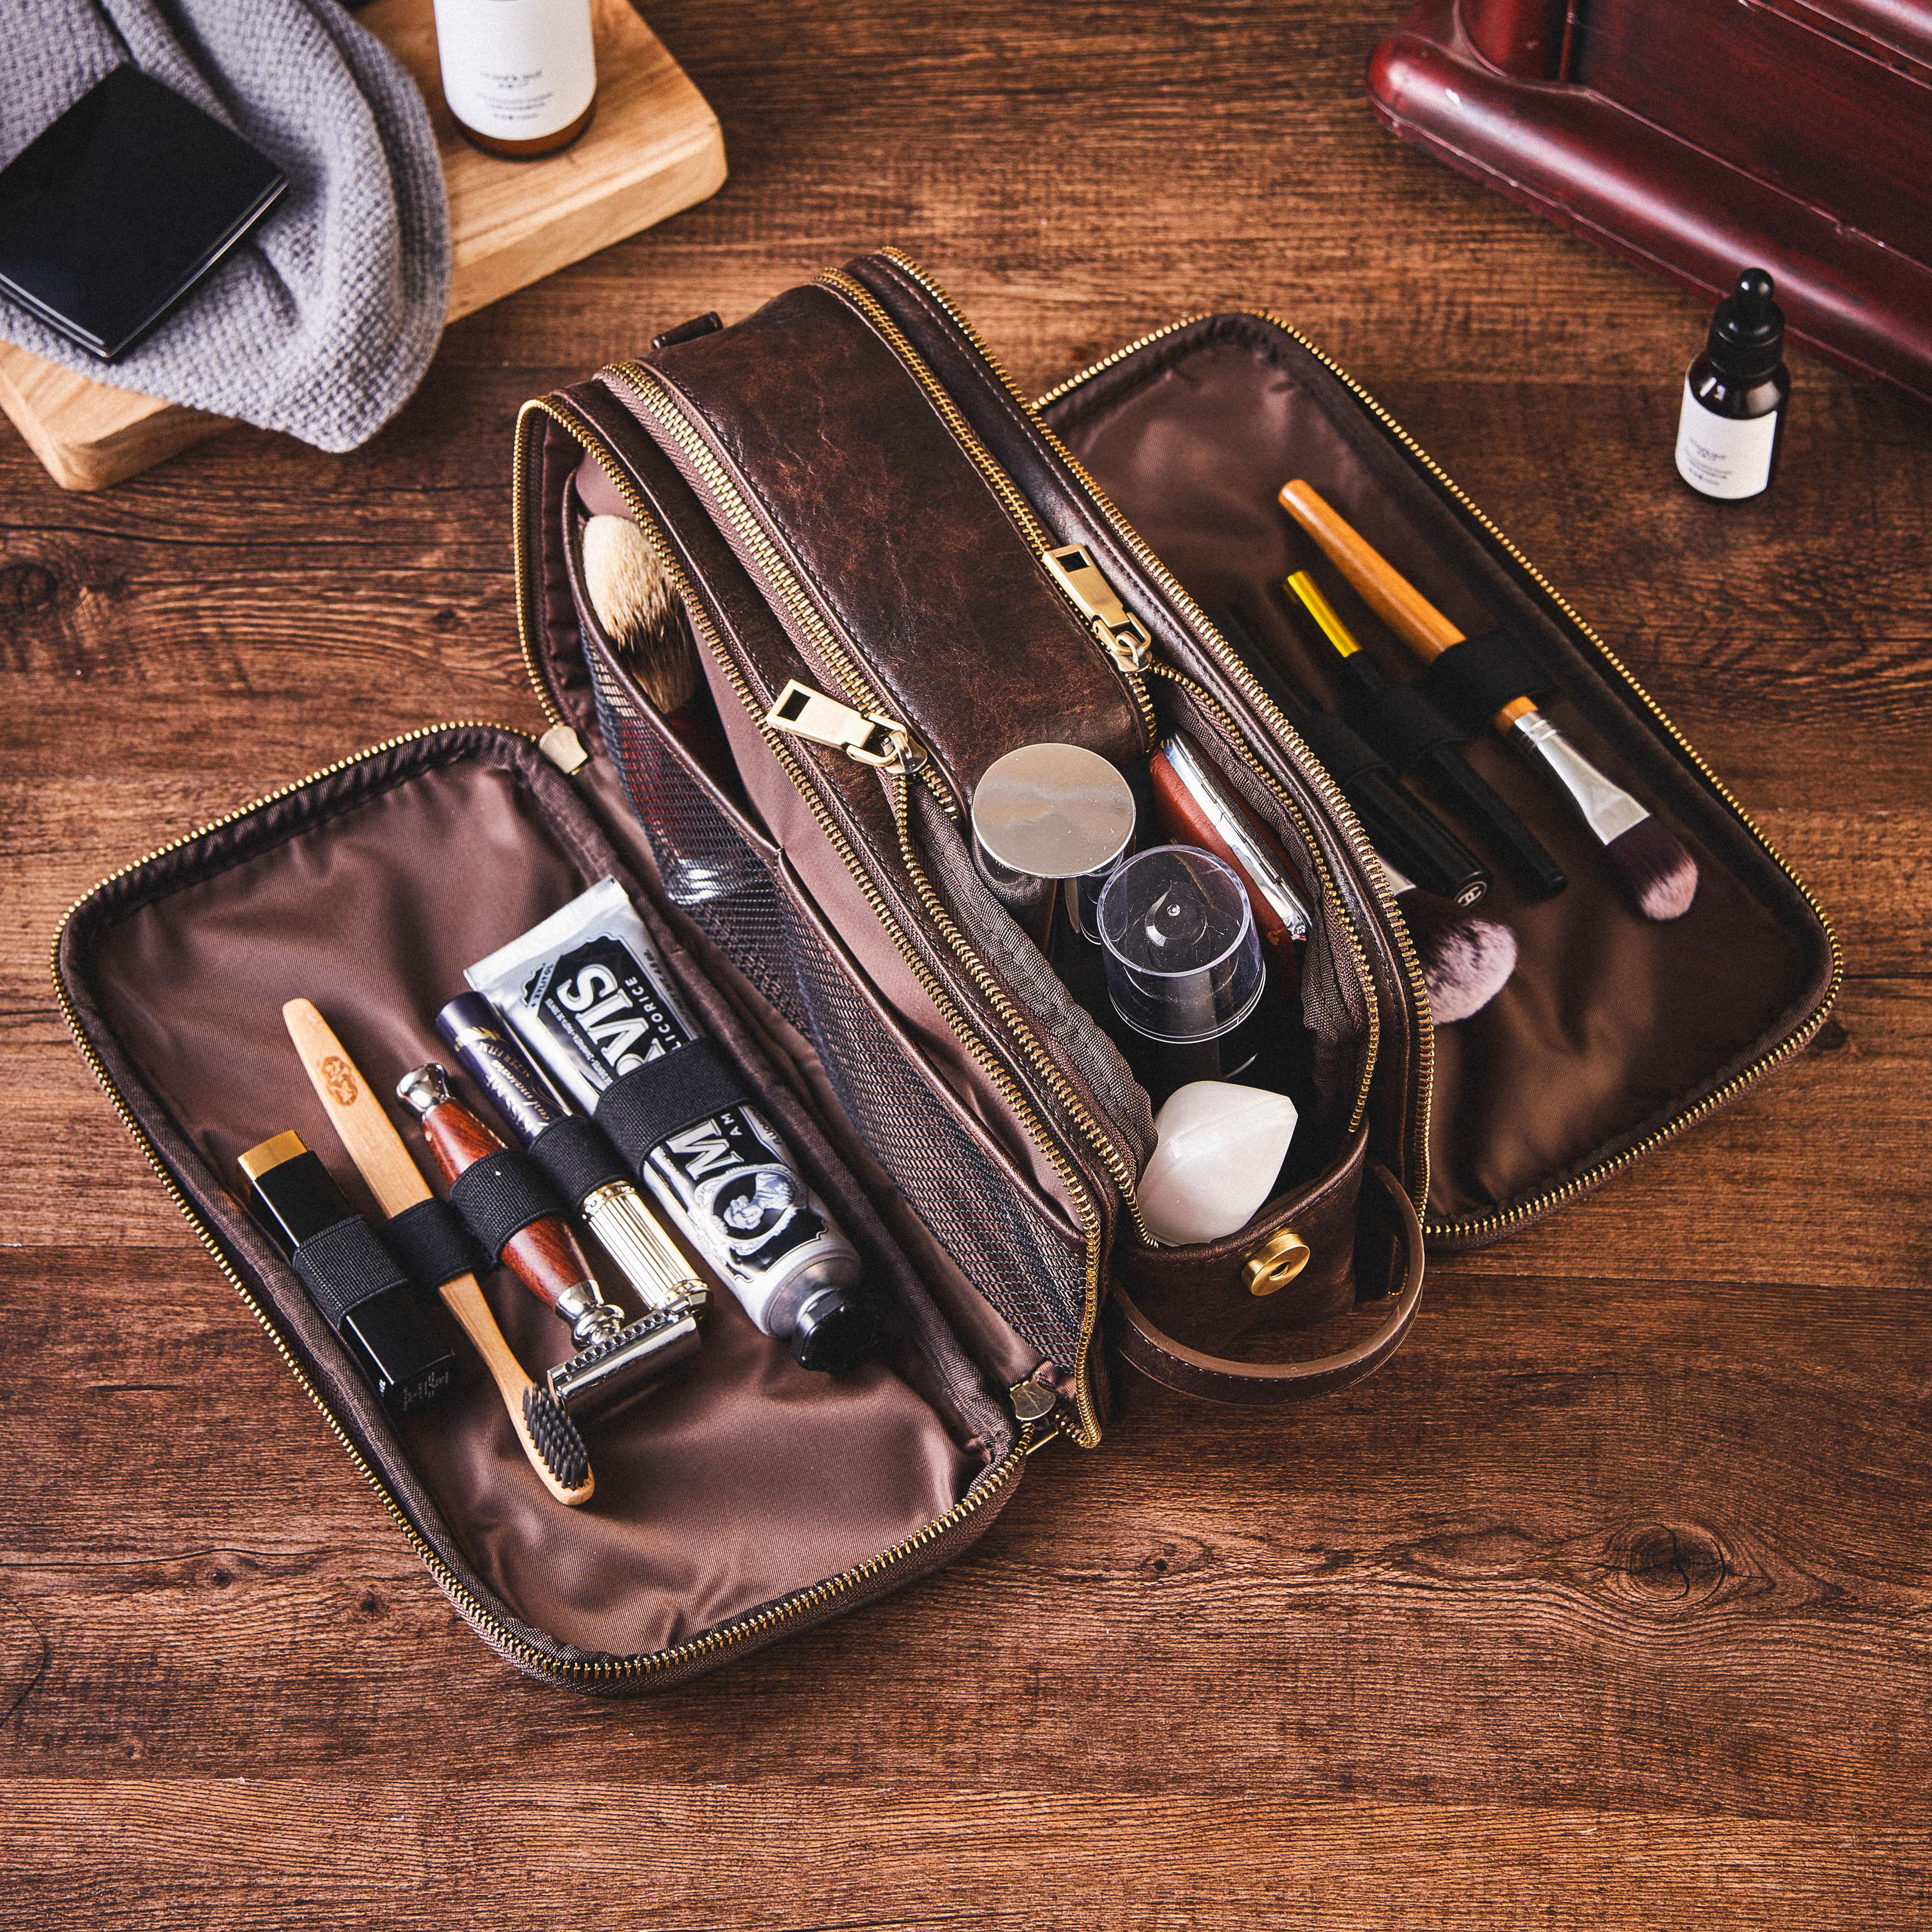 Groomsmen Gift Bag Personalized Toiletry Bag Travel Case Leather Dopp Kit  Bag